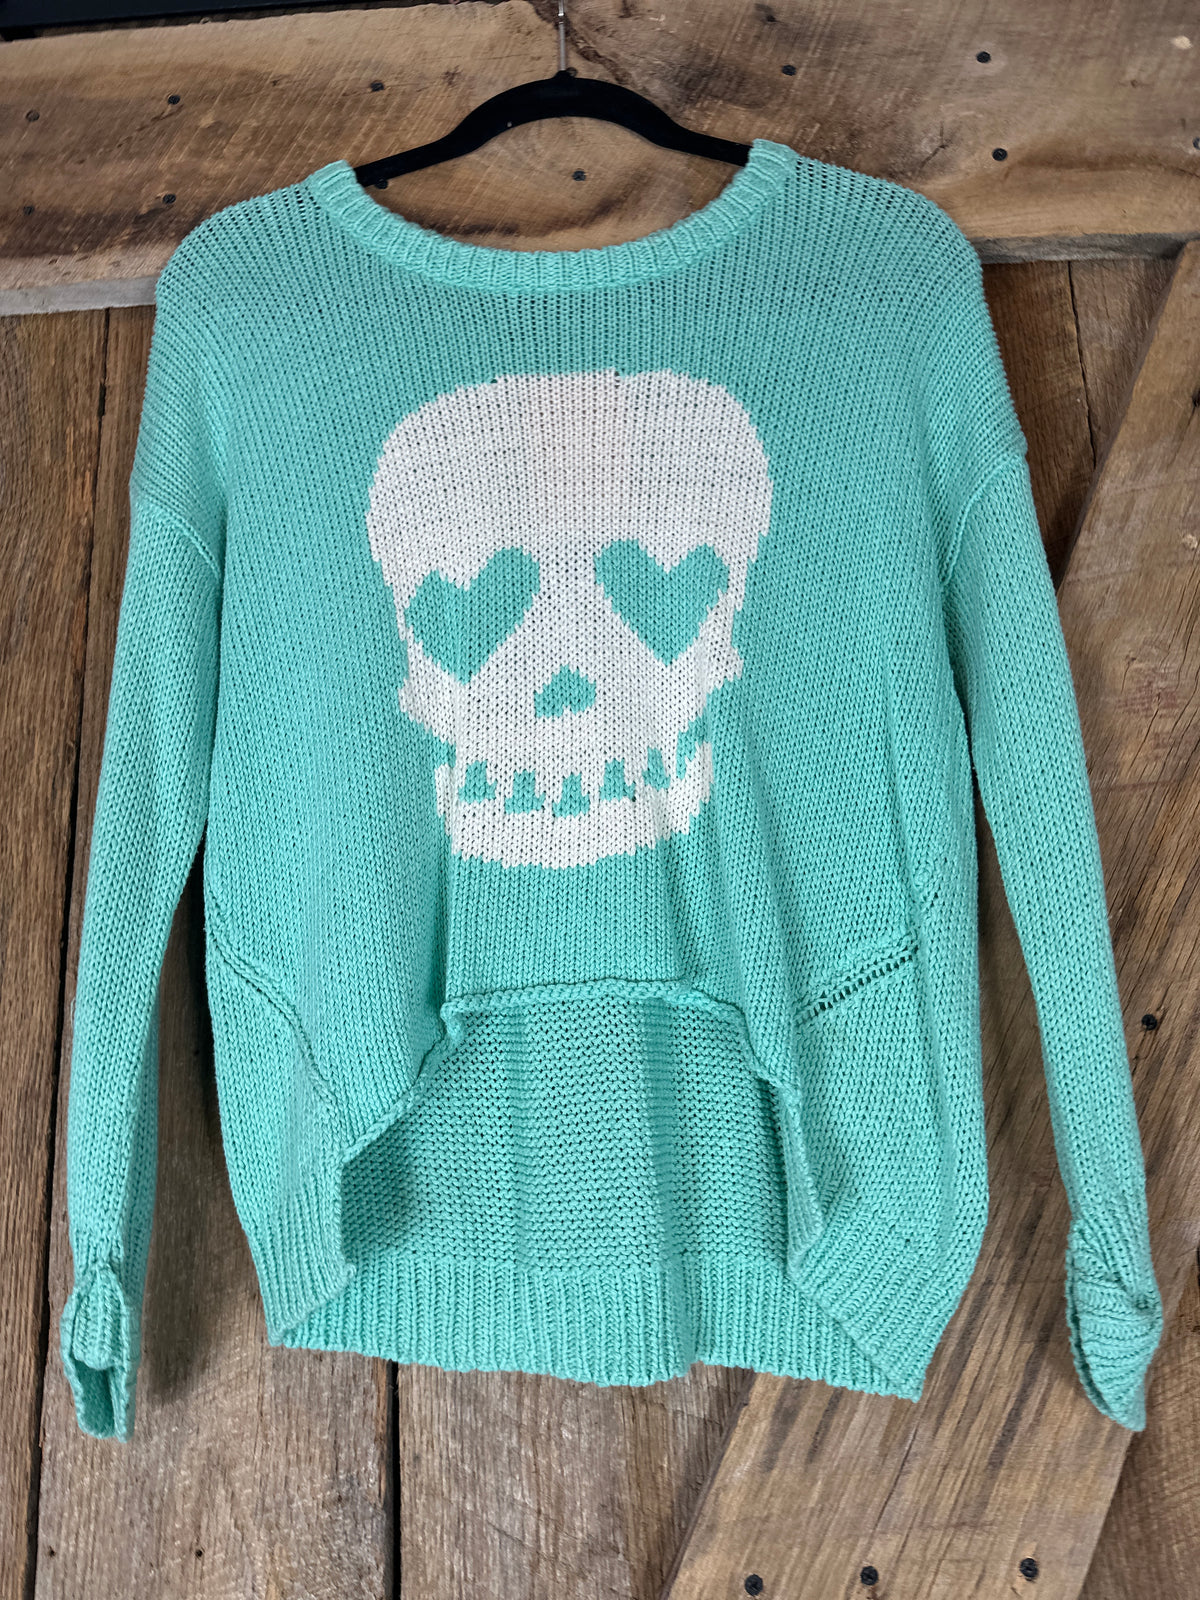 Skull Sweater - small